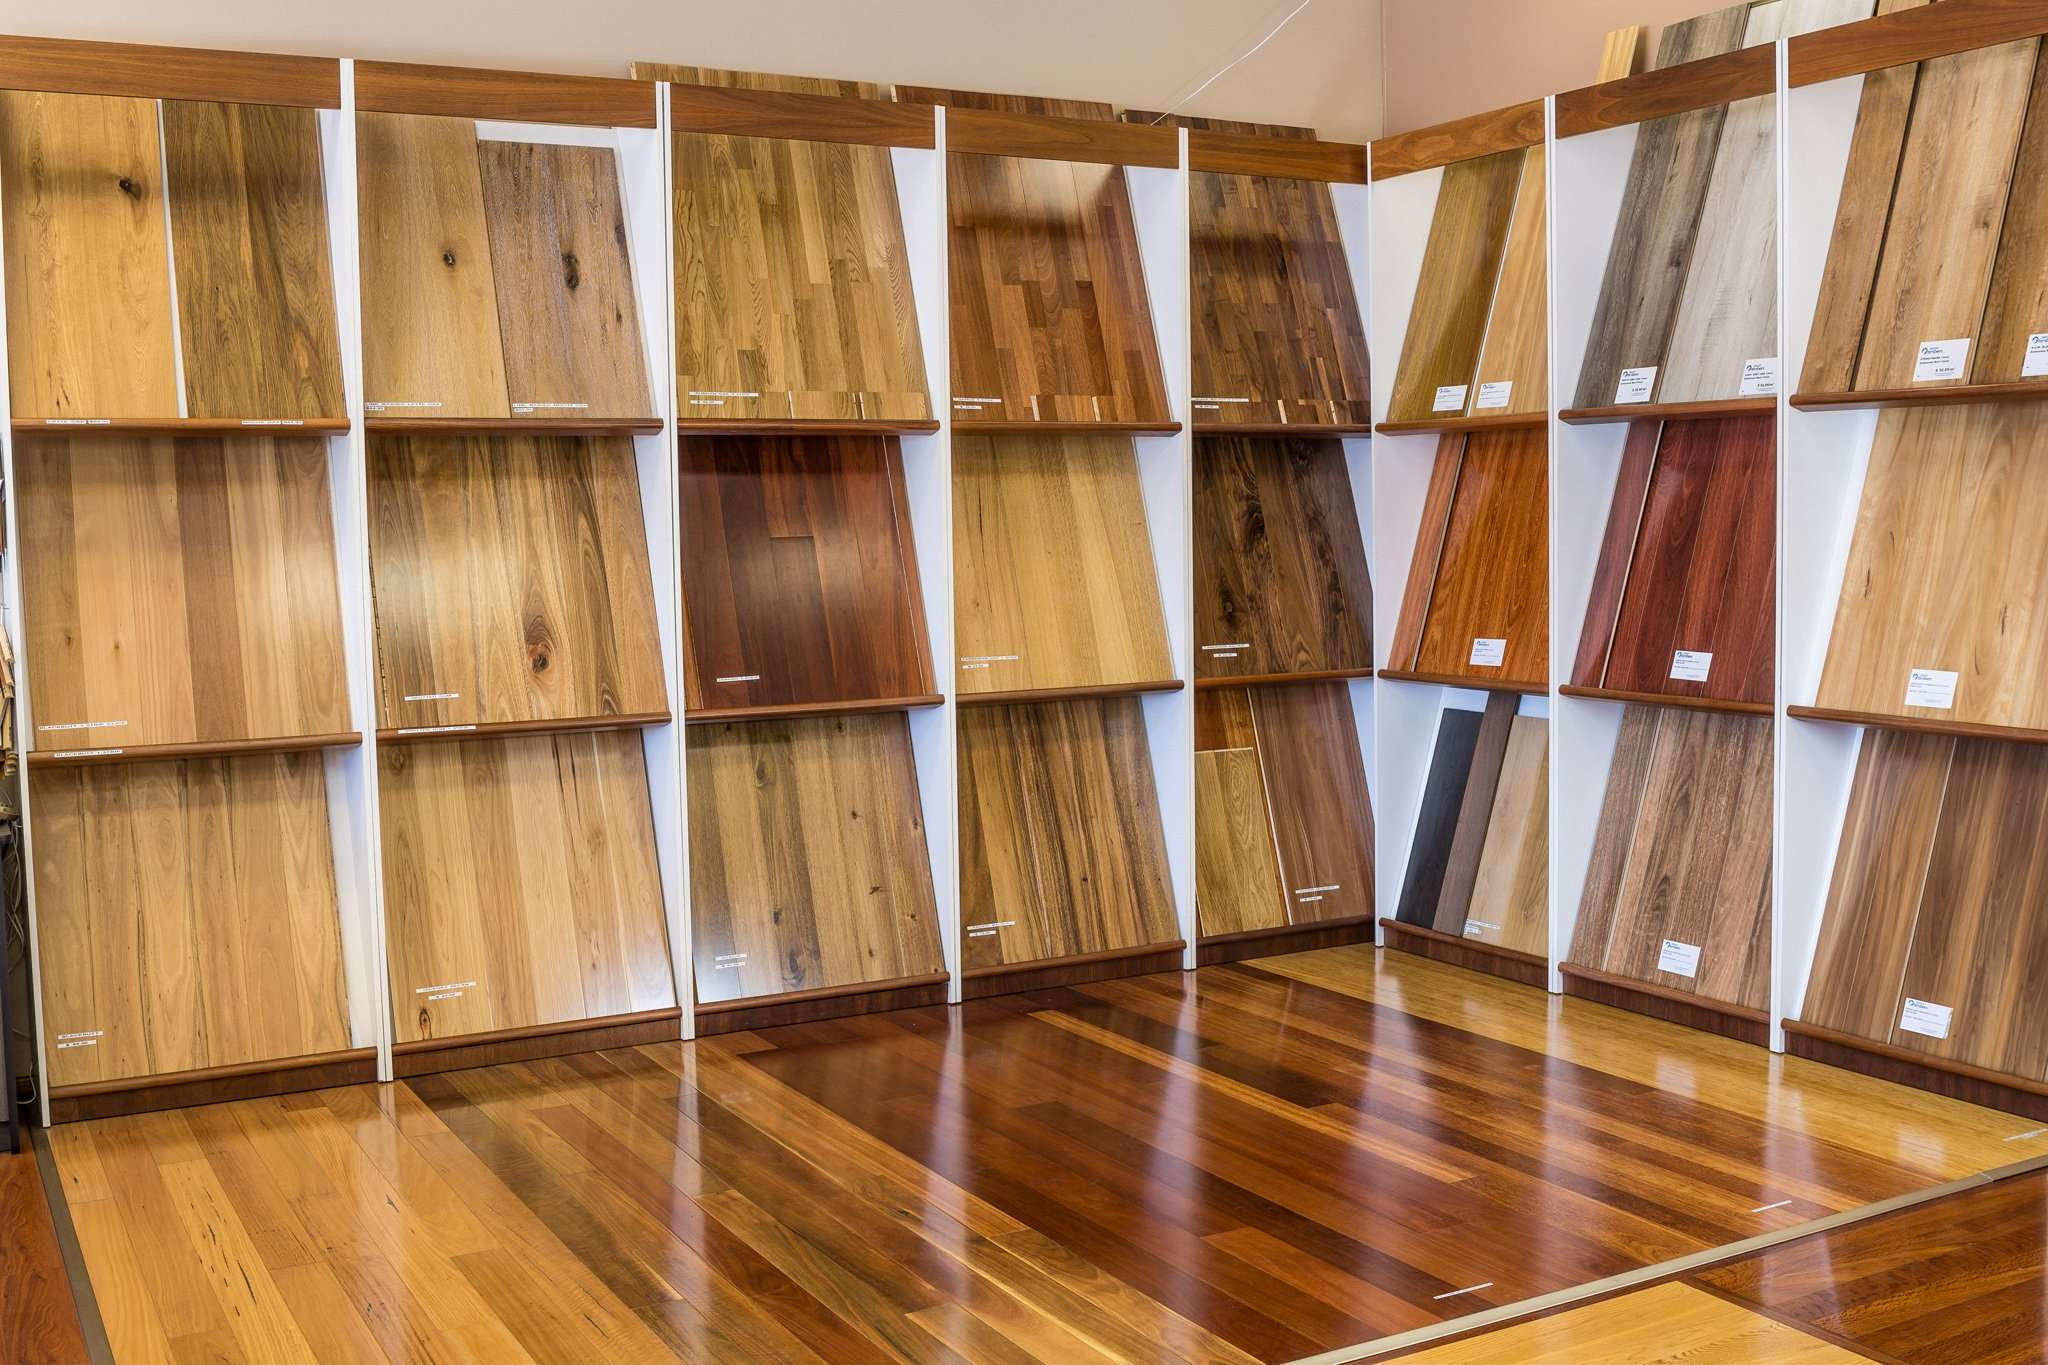 prefinished oak hardwood flooring prices of wood floor price lists a1 wood floors with 12mm laminate on sale 28 00 ma²